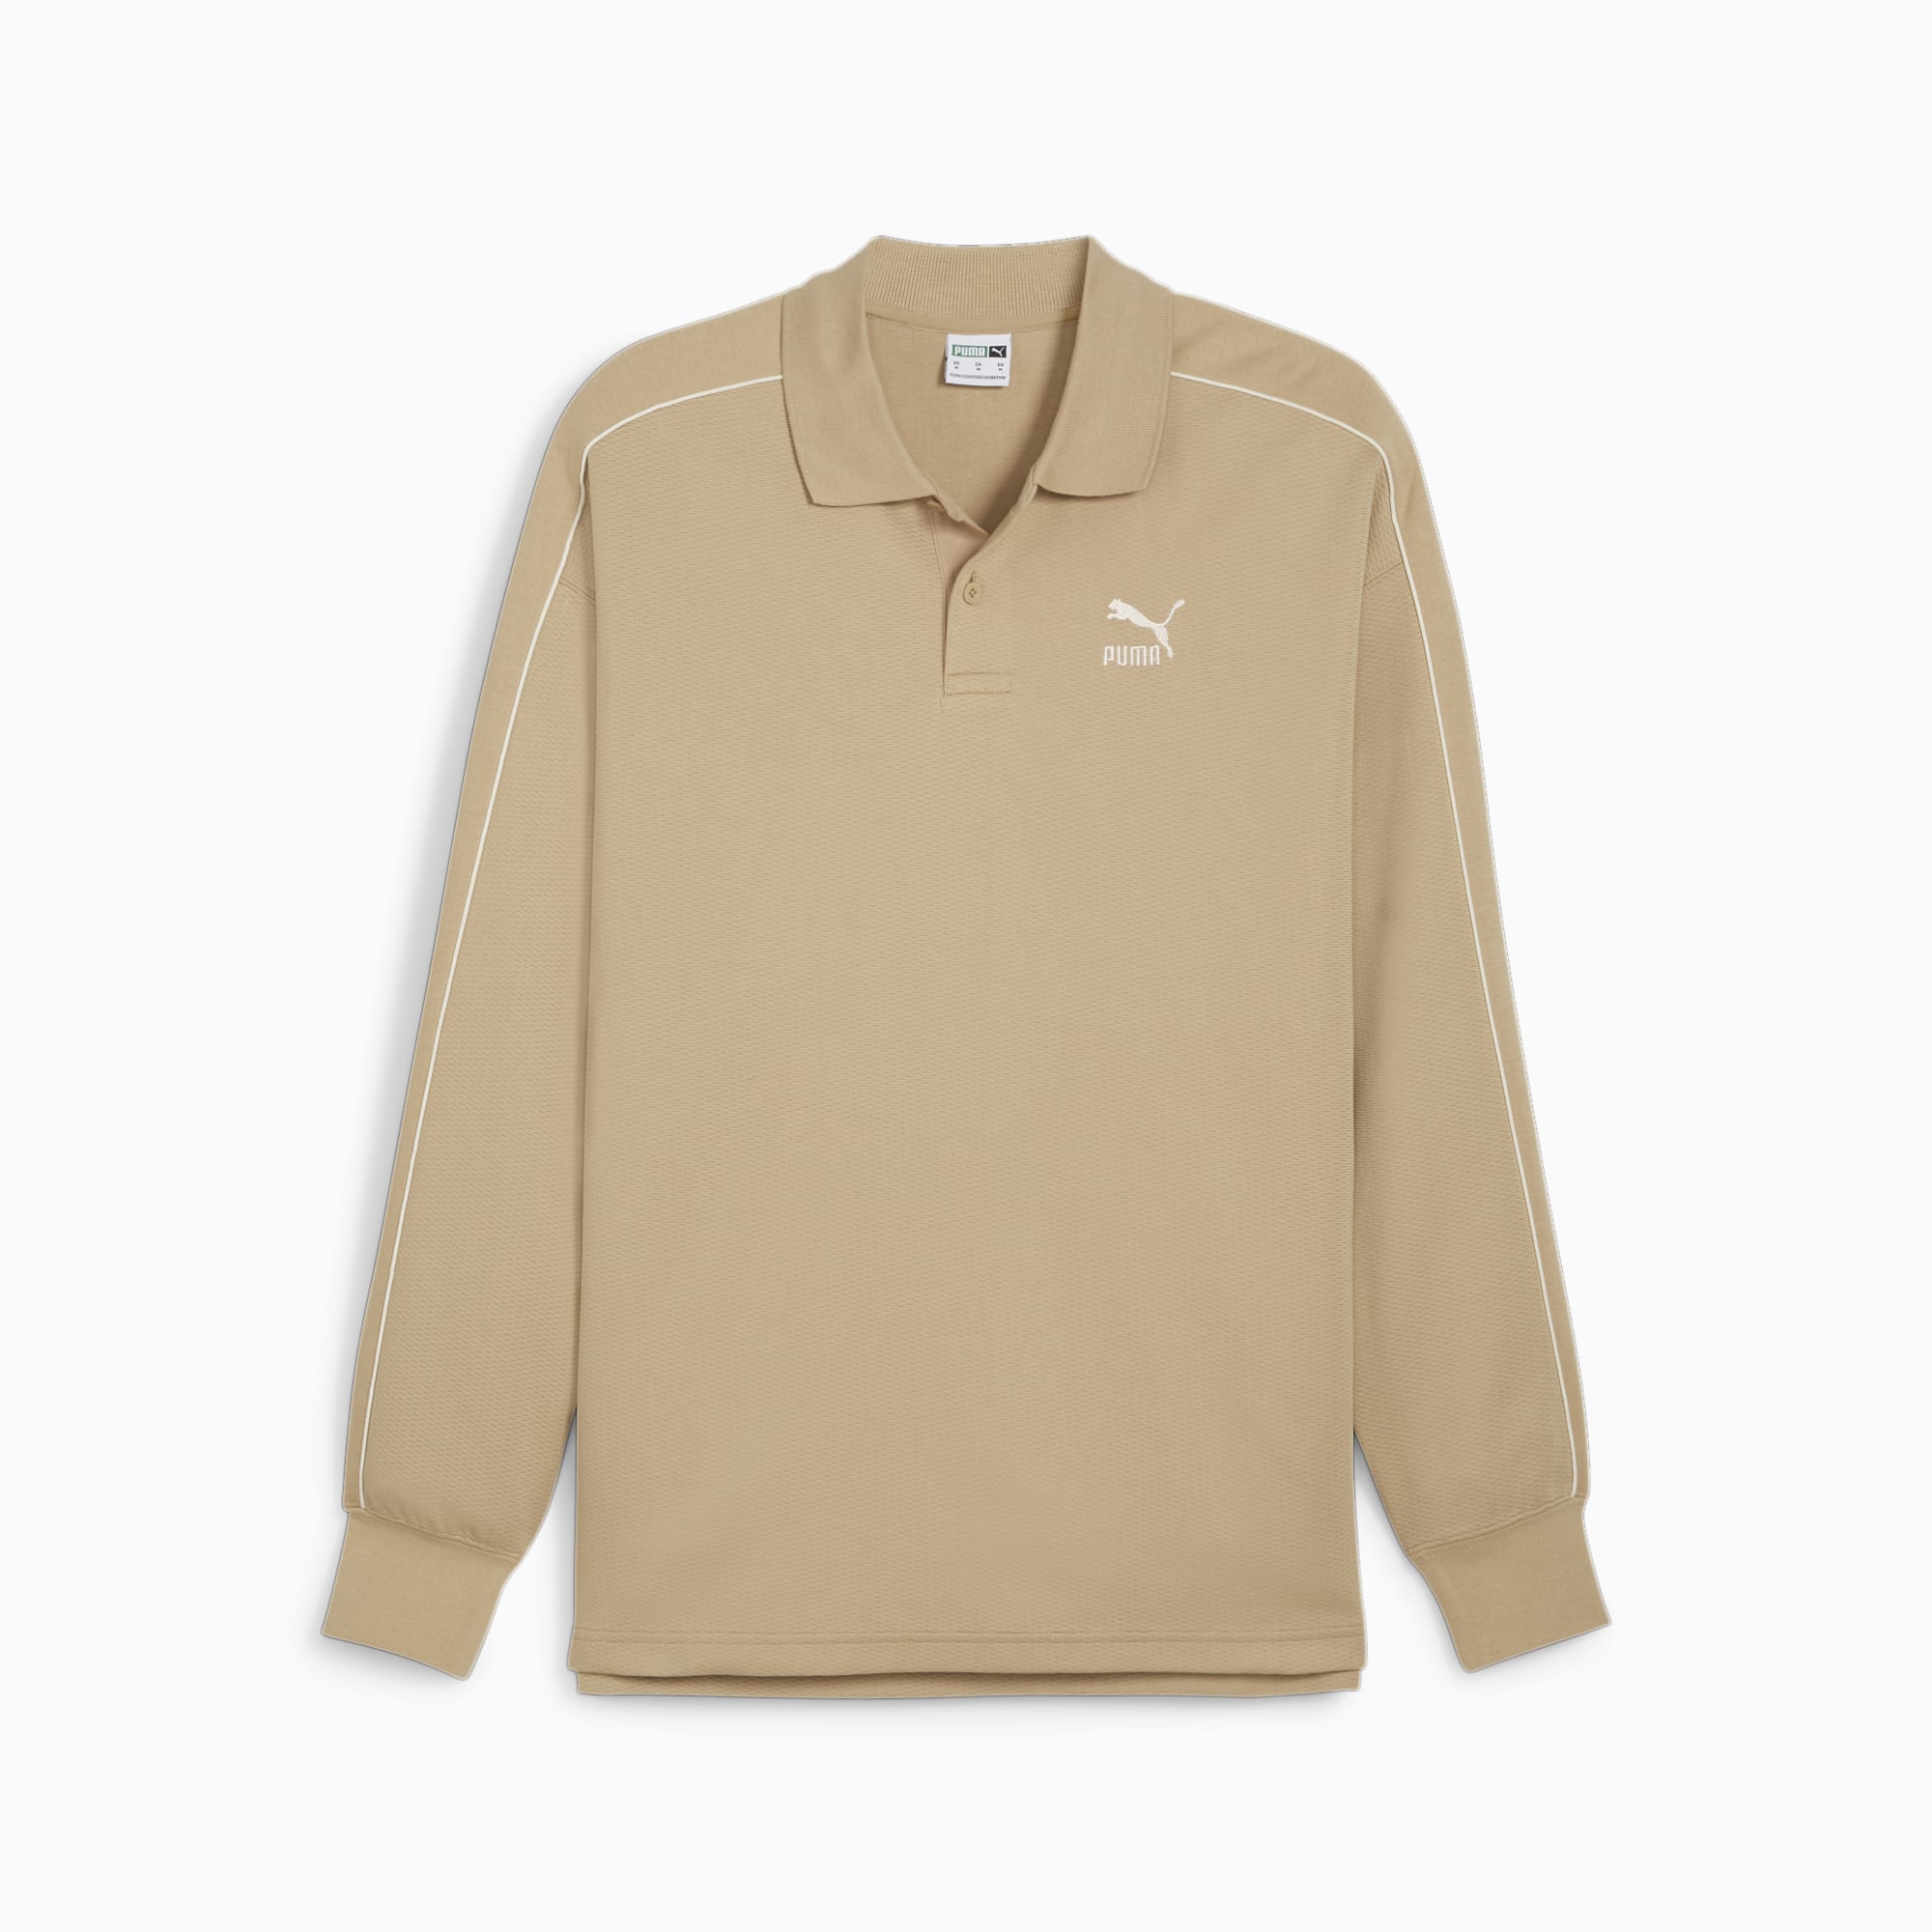 PUMA T7 Men's Polo Sweatshirt, Prairie Tan, Size L, Clothing